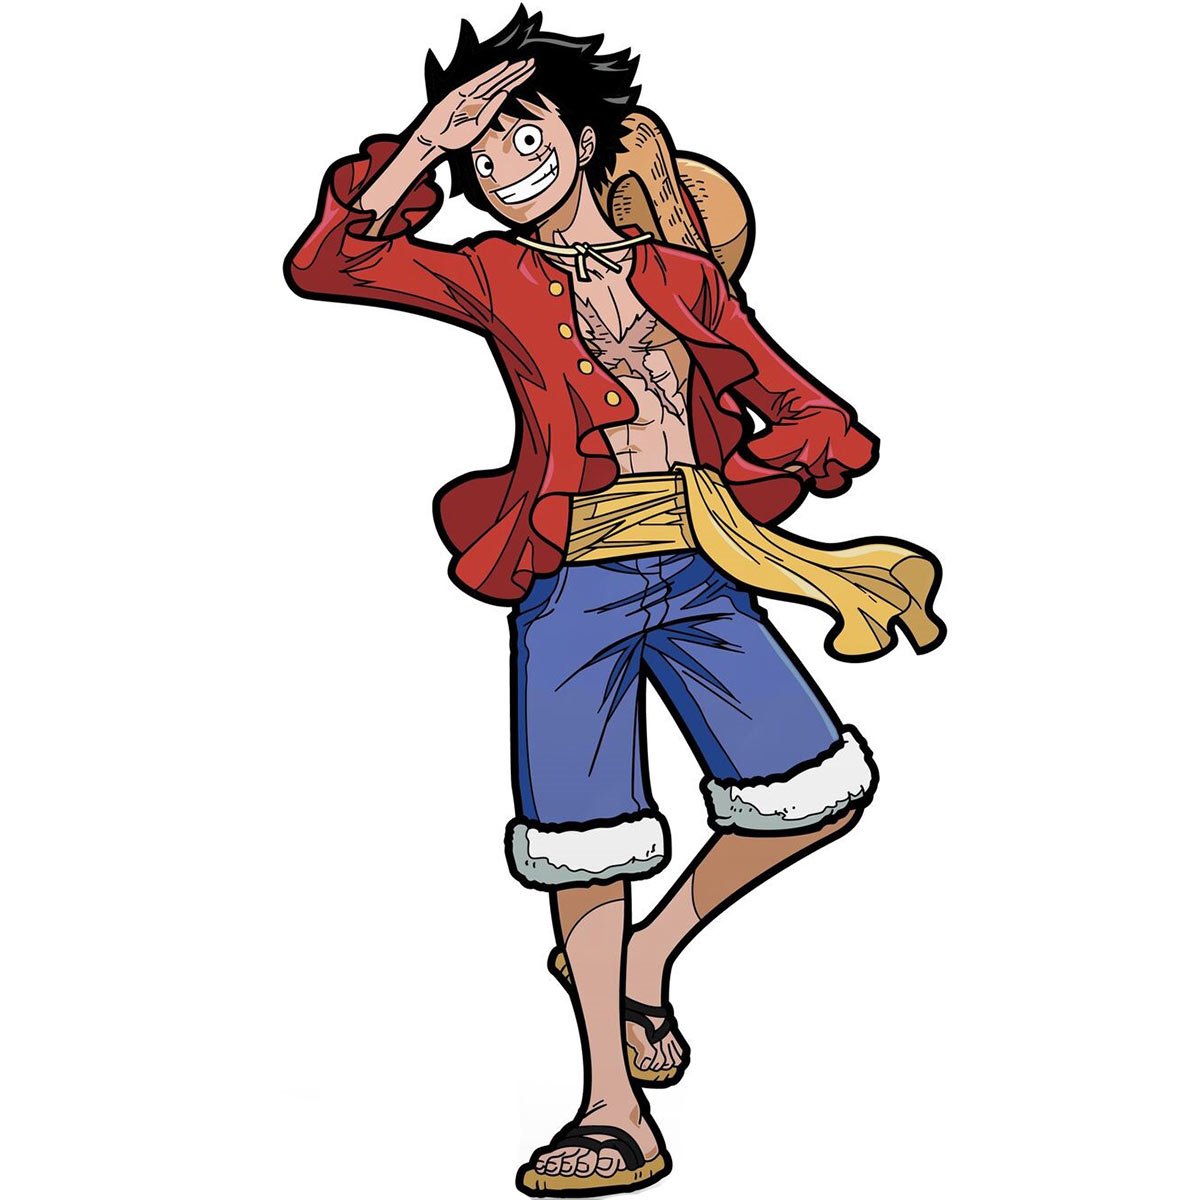 One Piece - Monkey D. Luffy (#1157) FiGPiN